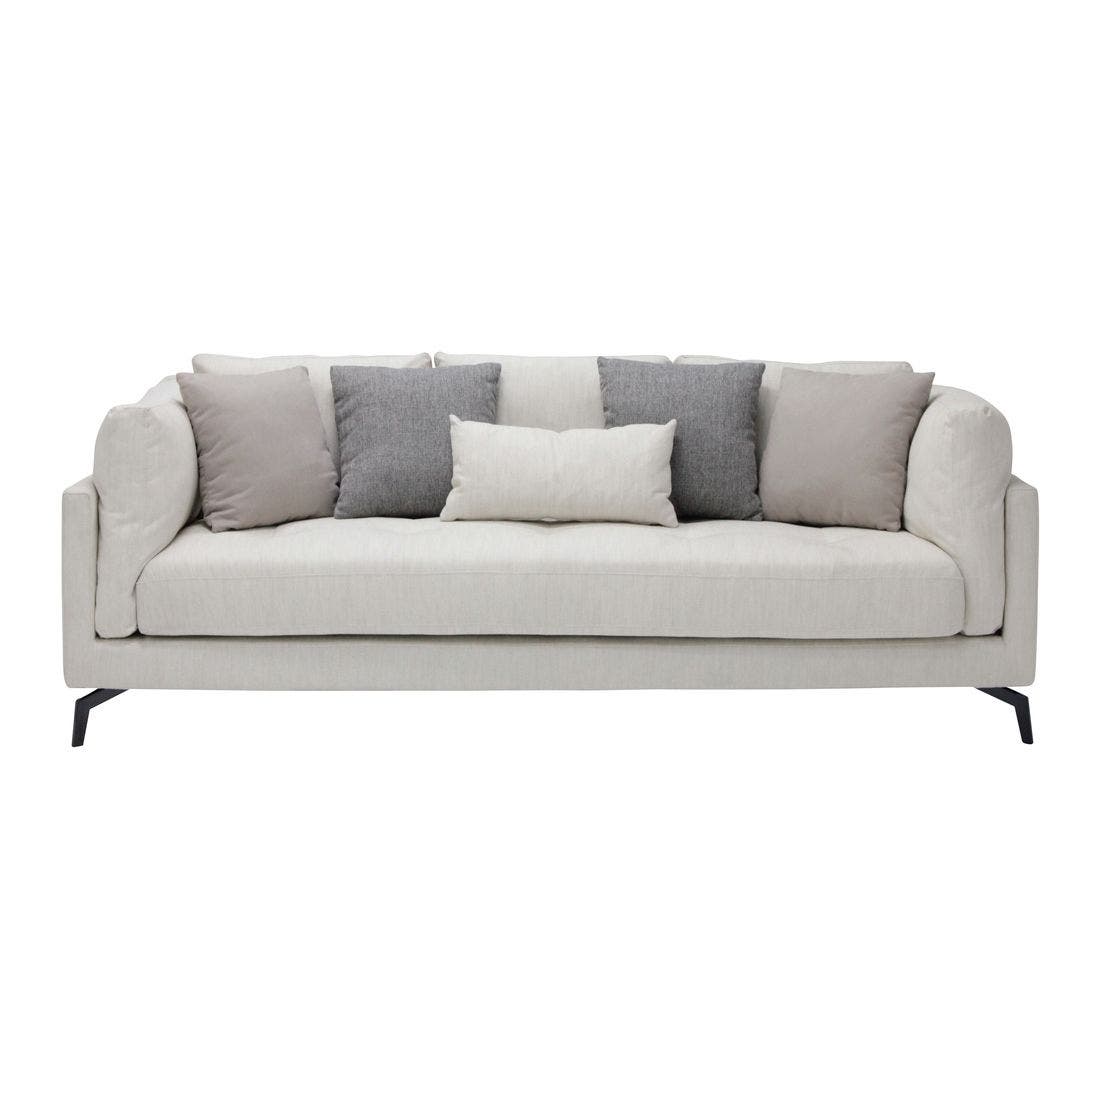 19199194-gubbie-furniture-sofa-recliner-sofa-01